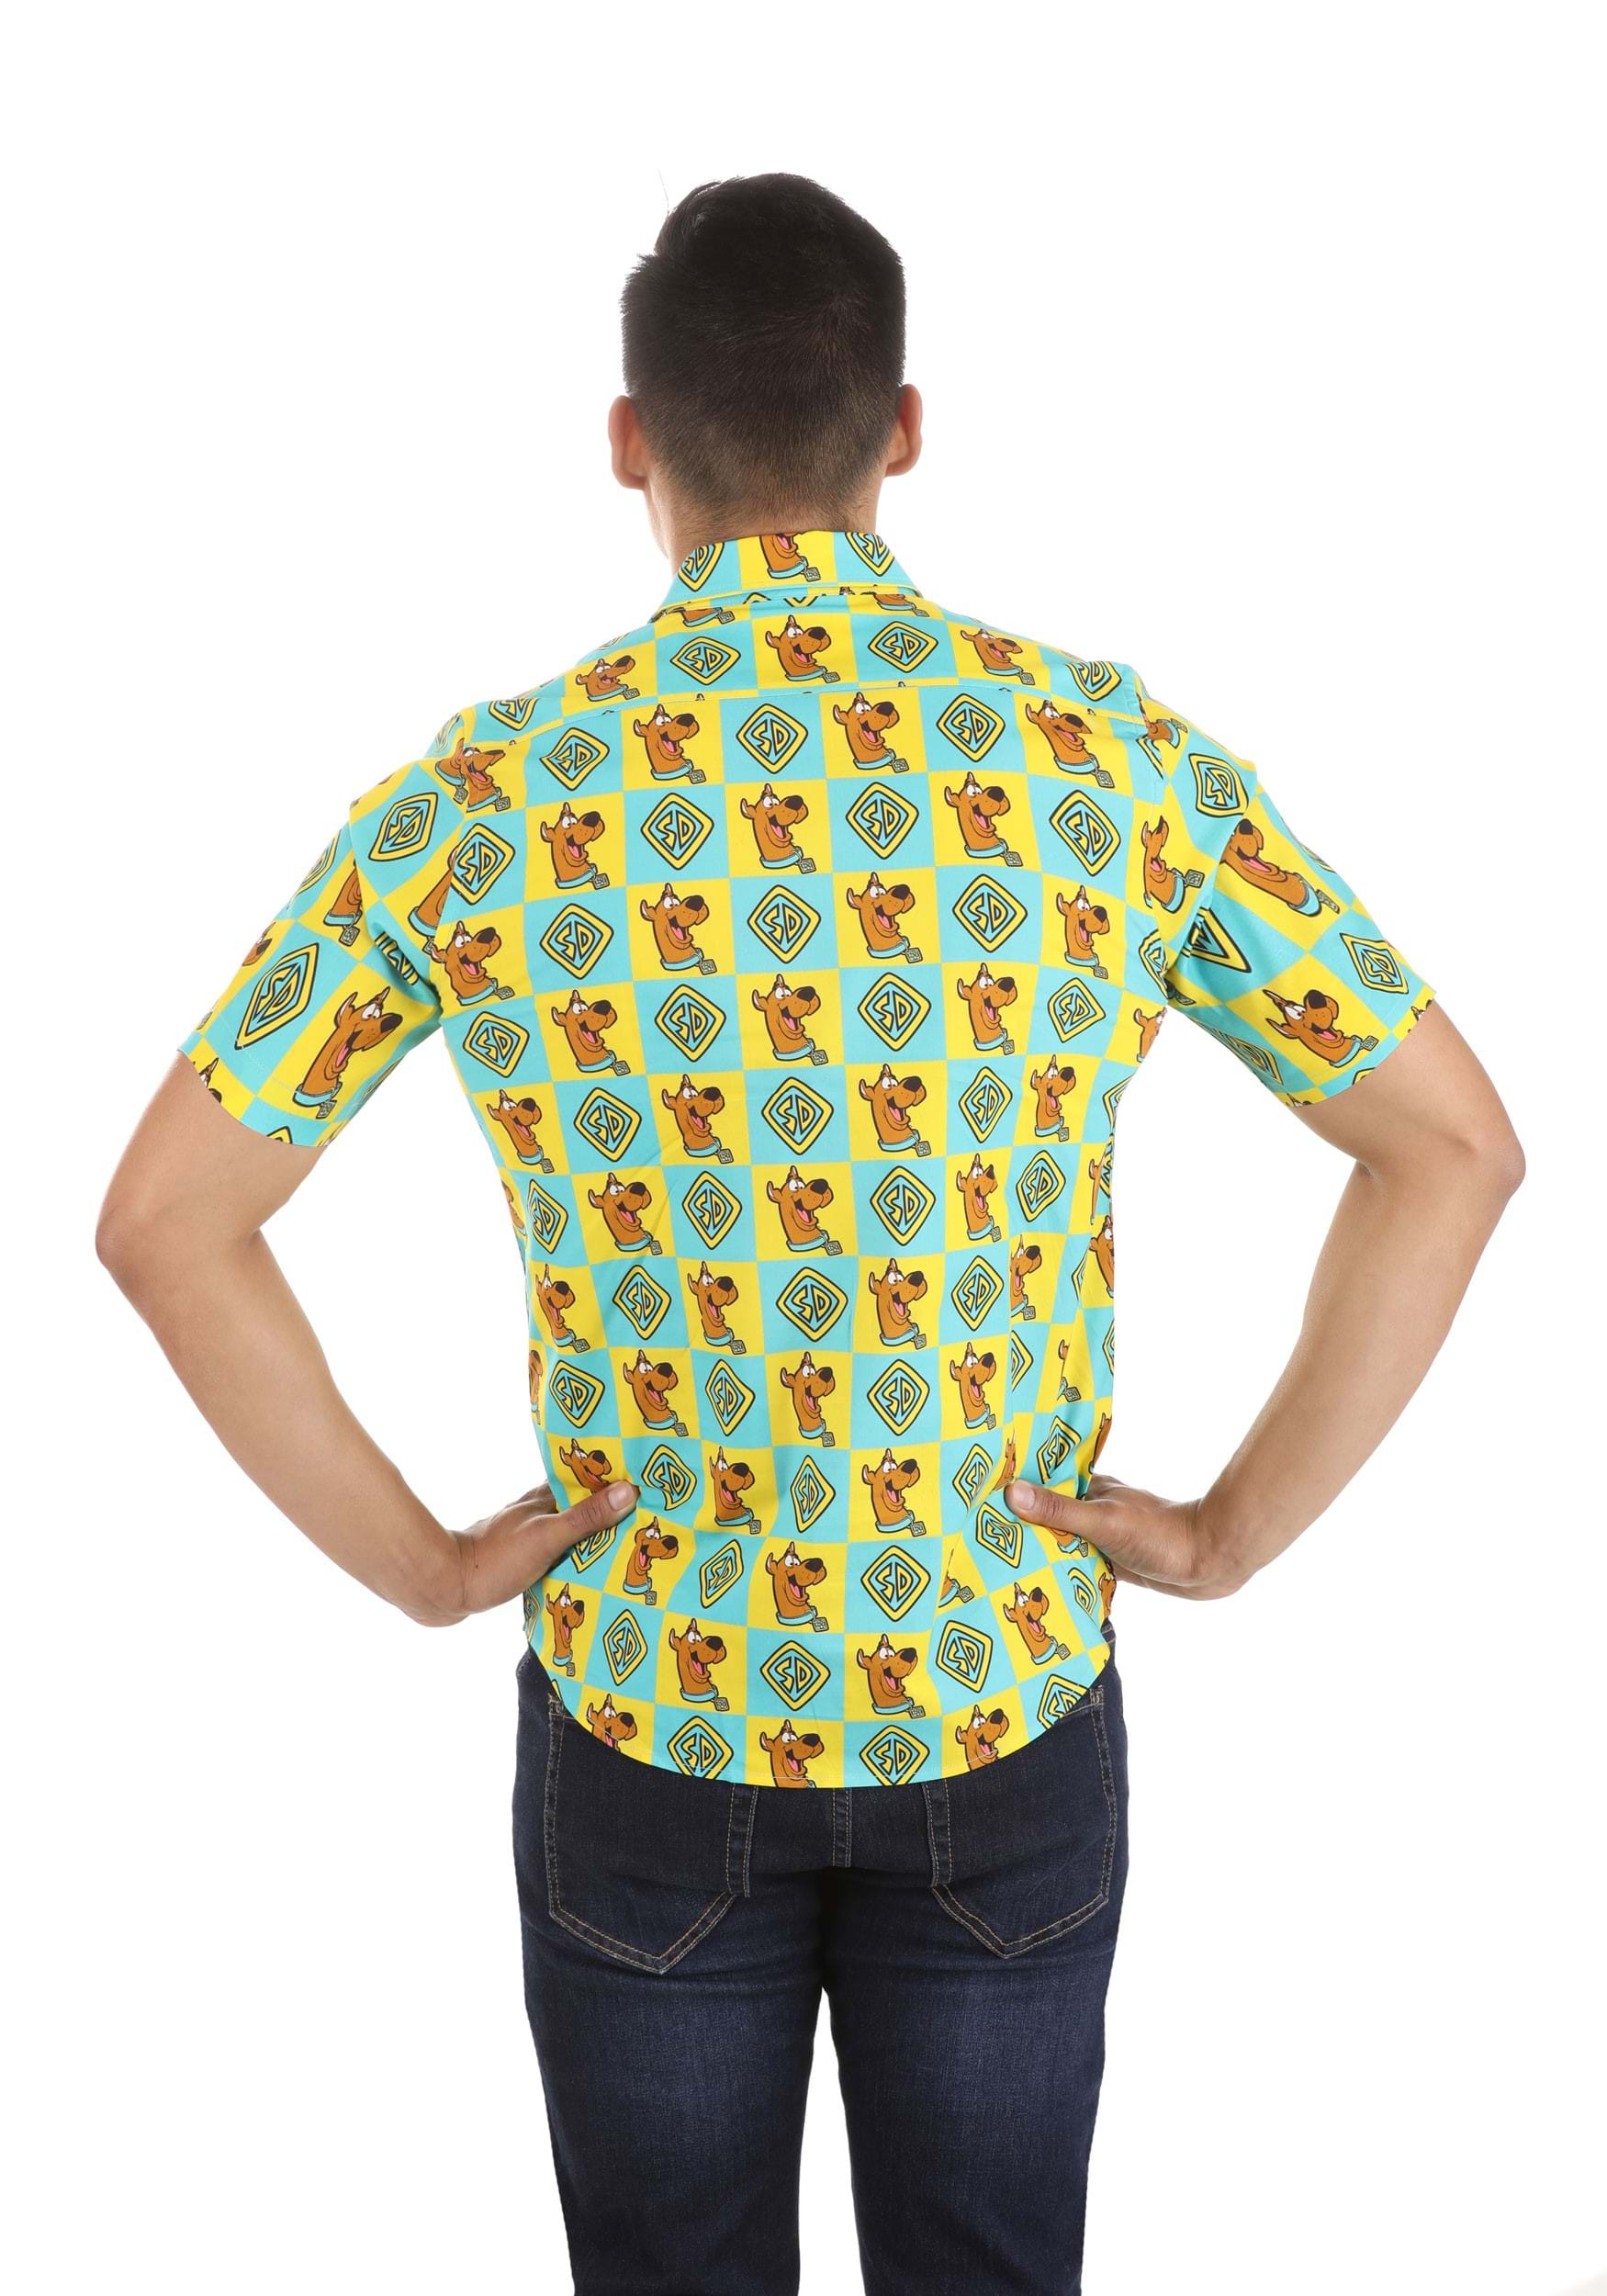 Scooby Doo Collar Shirt For Men , Scooby Doo Apparel